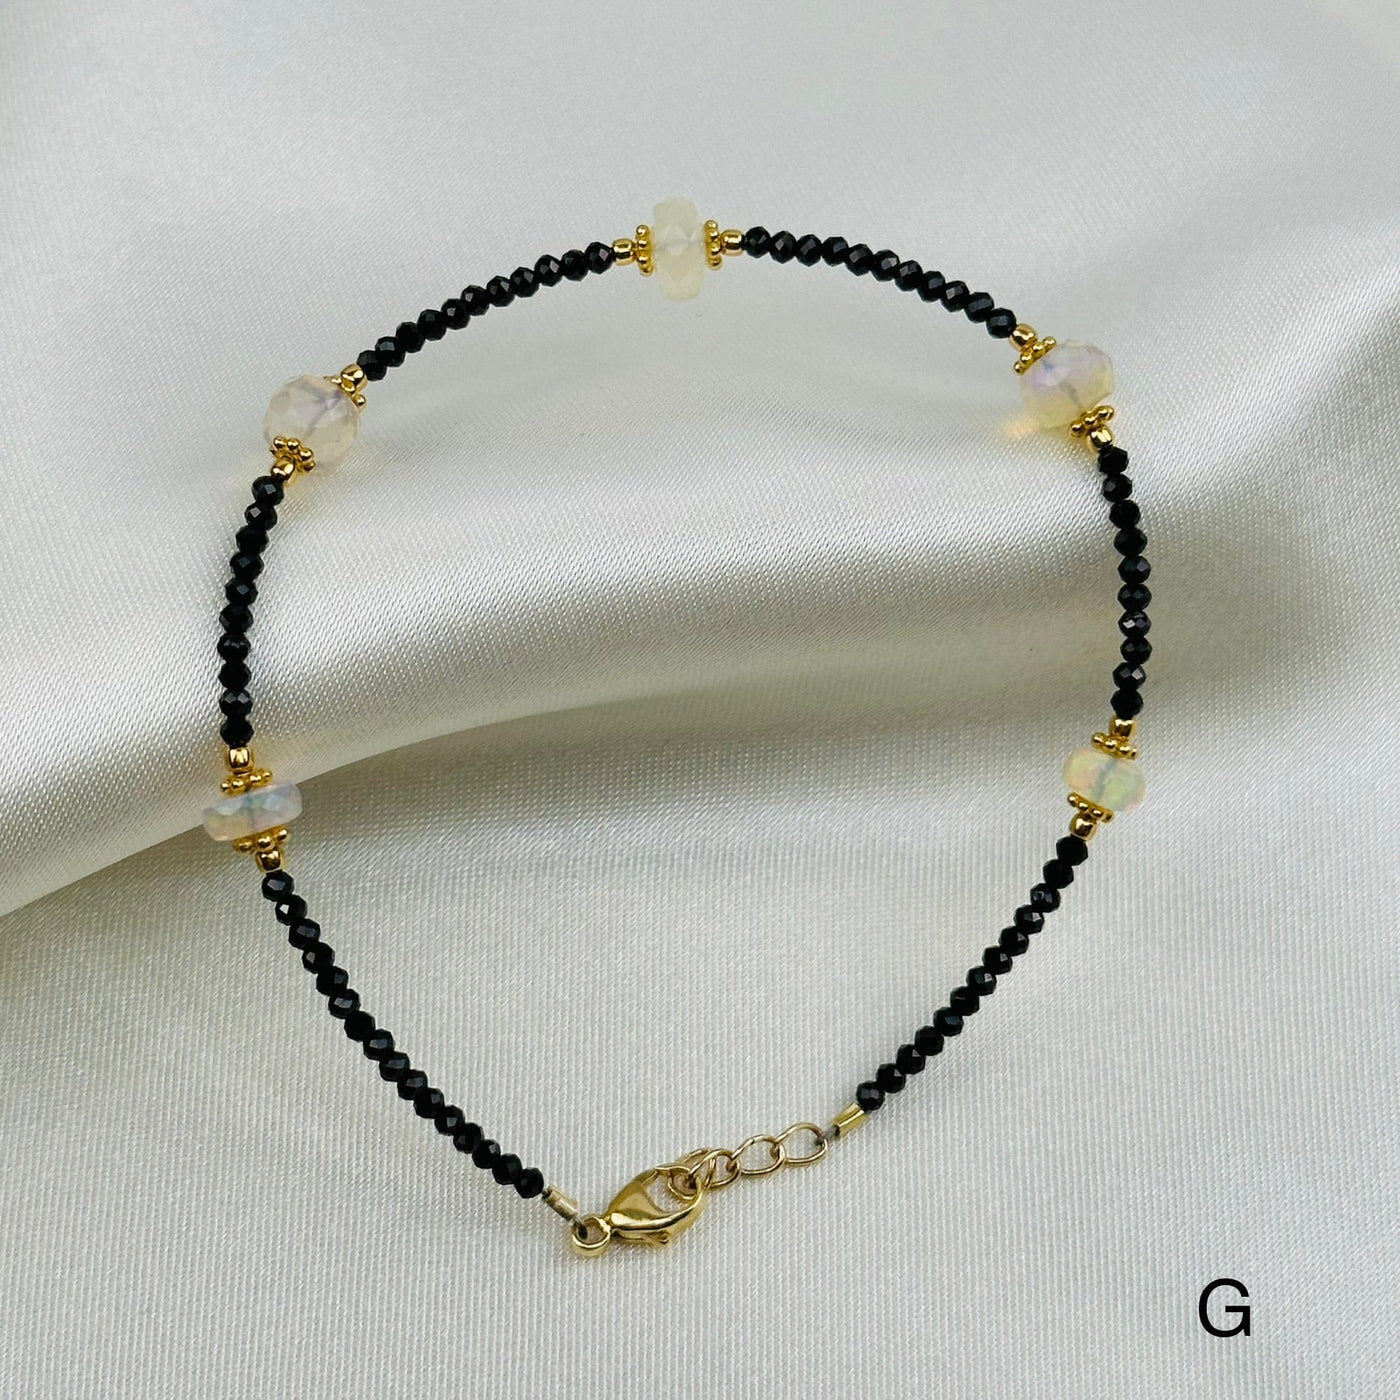 Fancy Opal Bracelet - YOU CHOOSE - option G